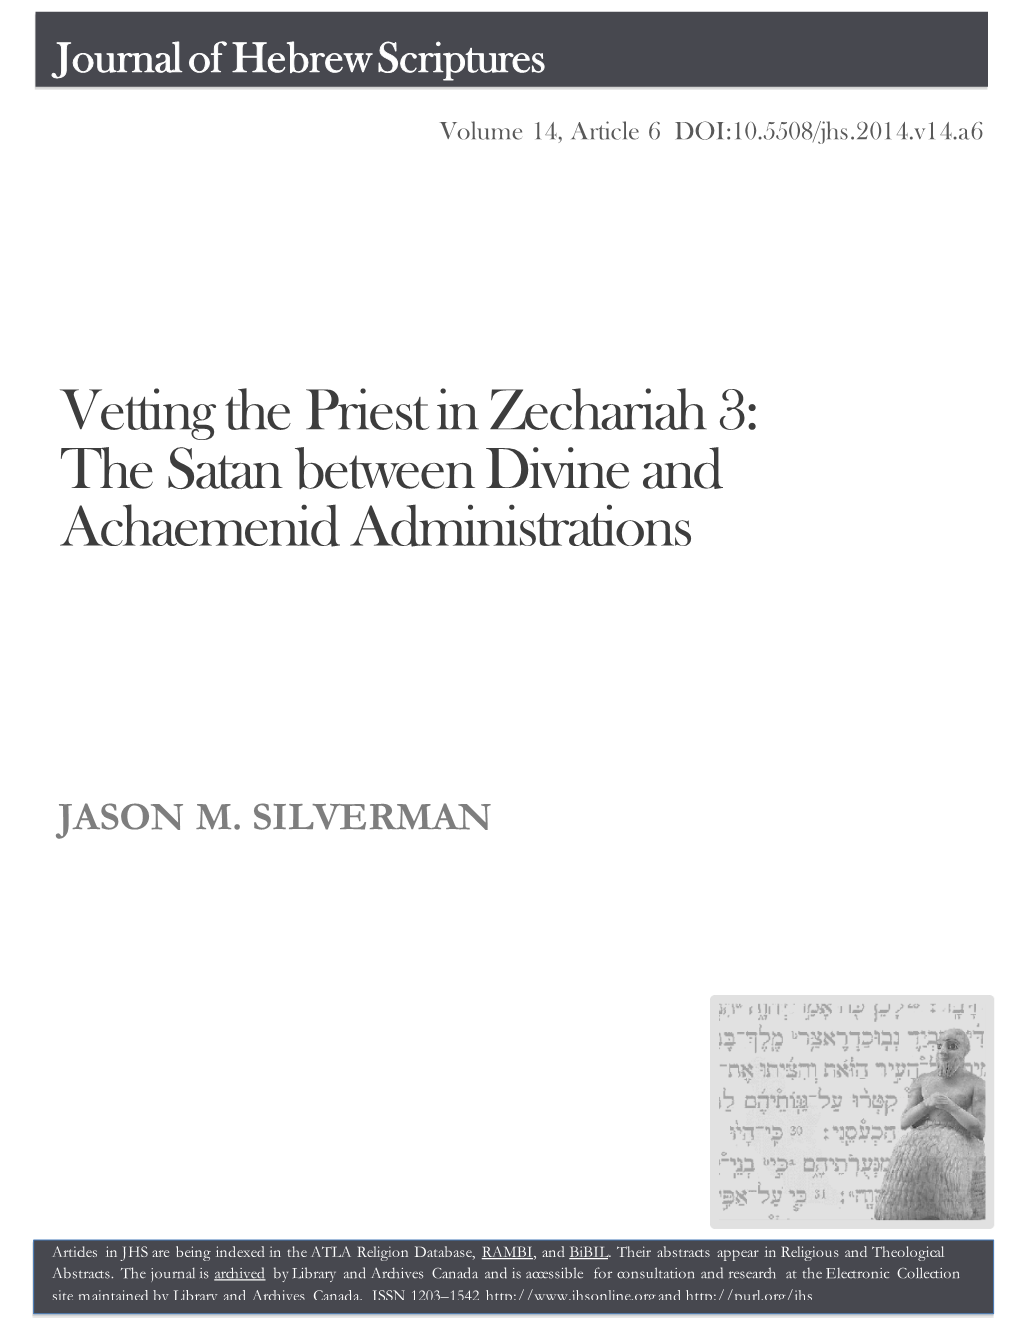 Vetting the Priest in Zechariah 3: the Satan Between Divine and Achaemenid Administrations